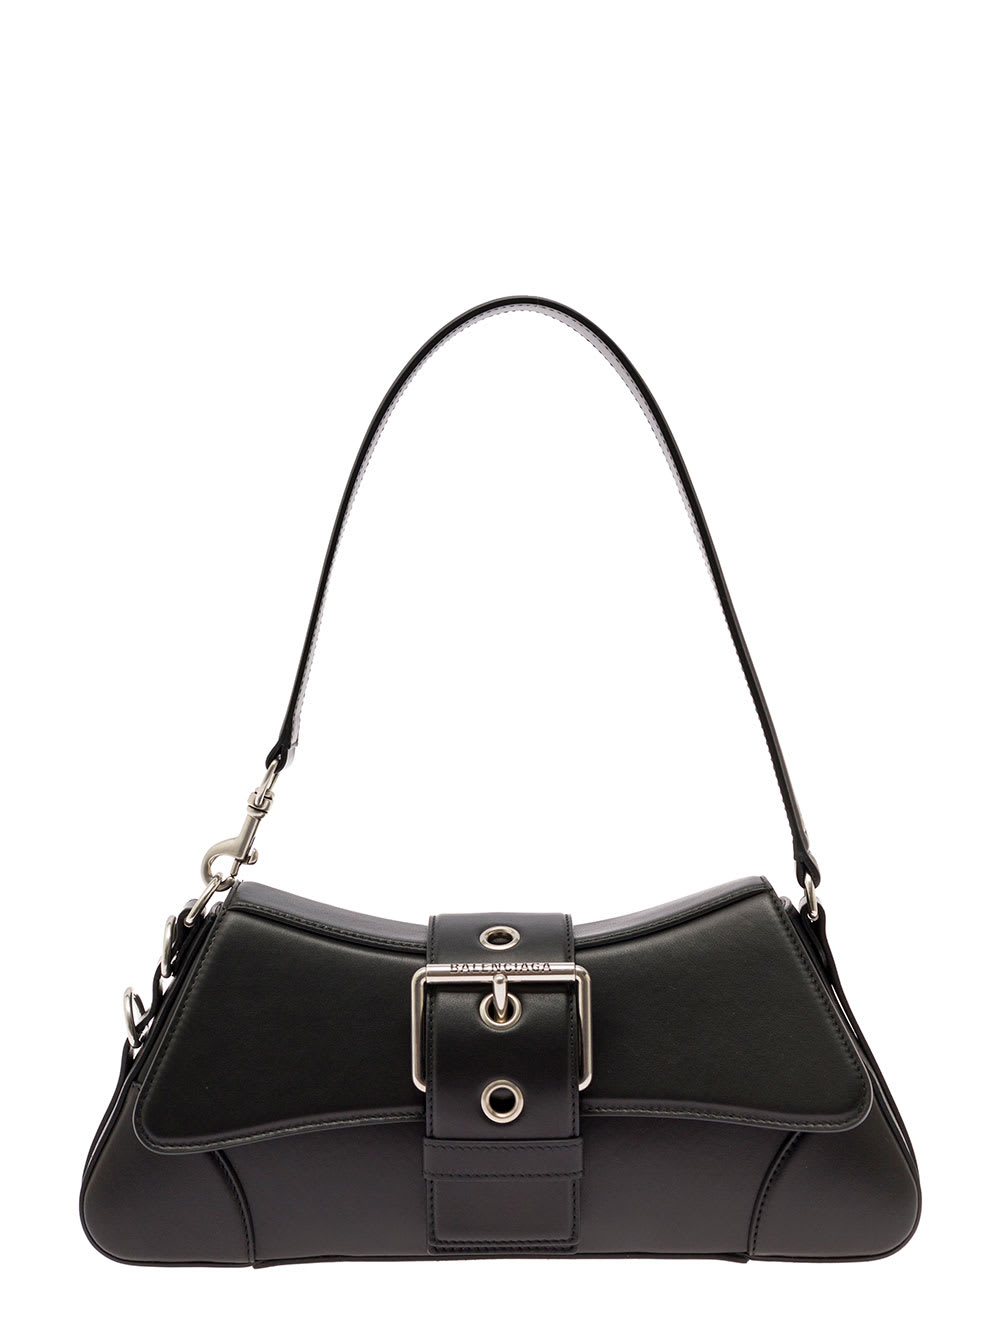 Balenciaga Lindsay Medium Black Leather Handbag With Buckle Balenciaga Woman